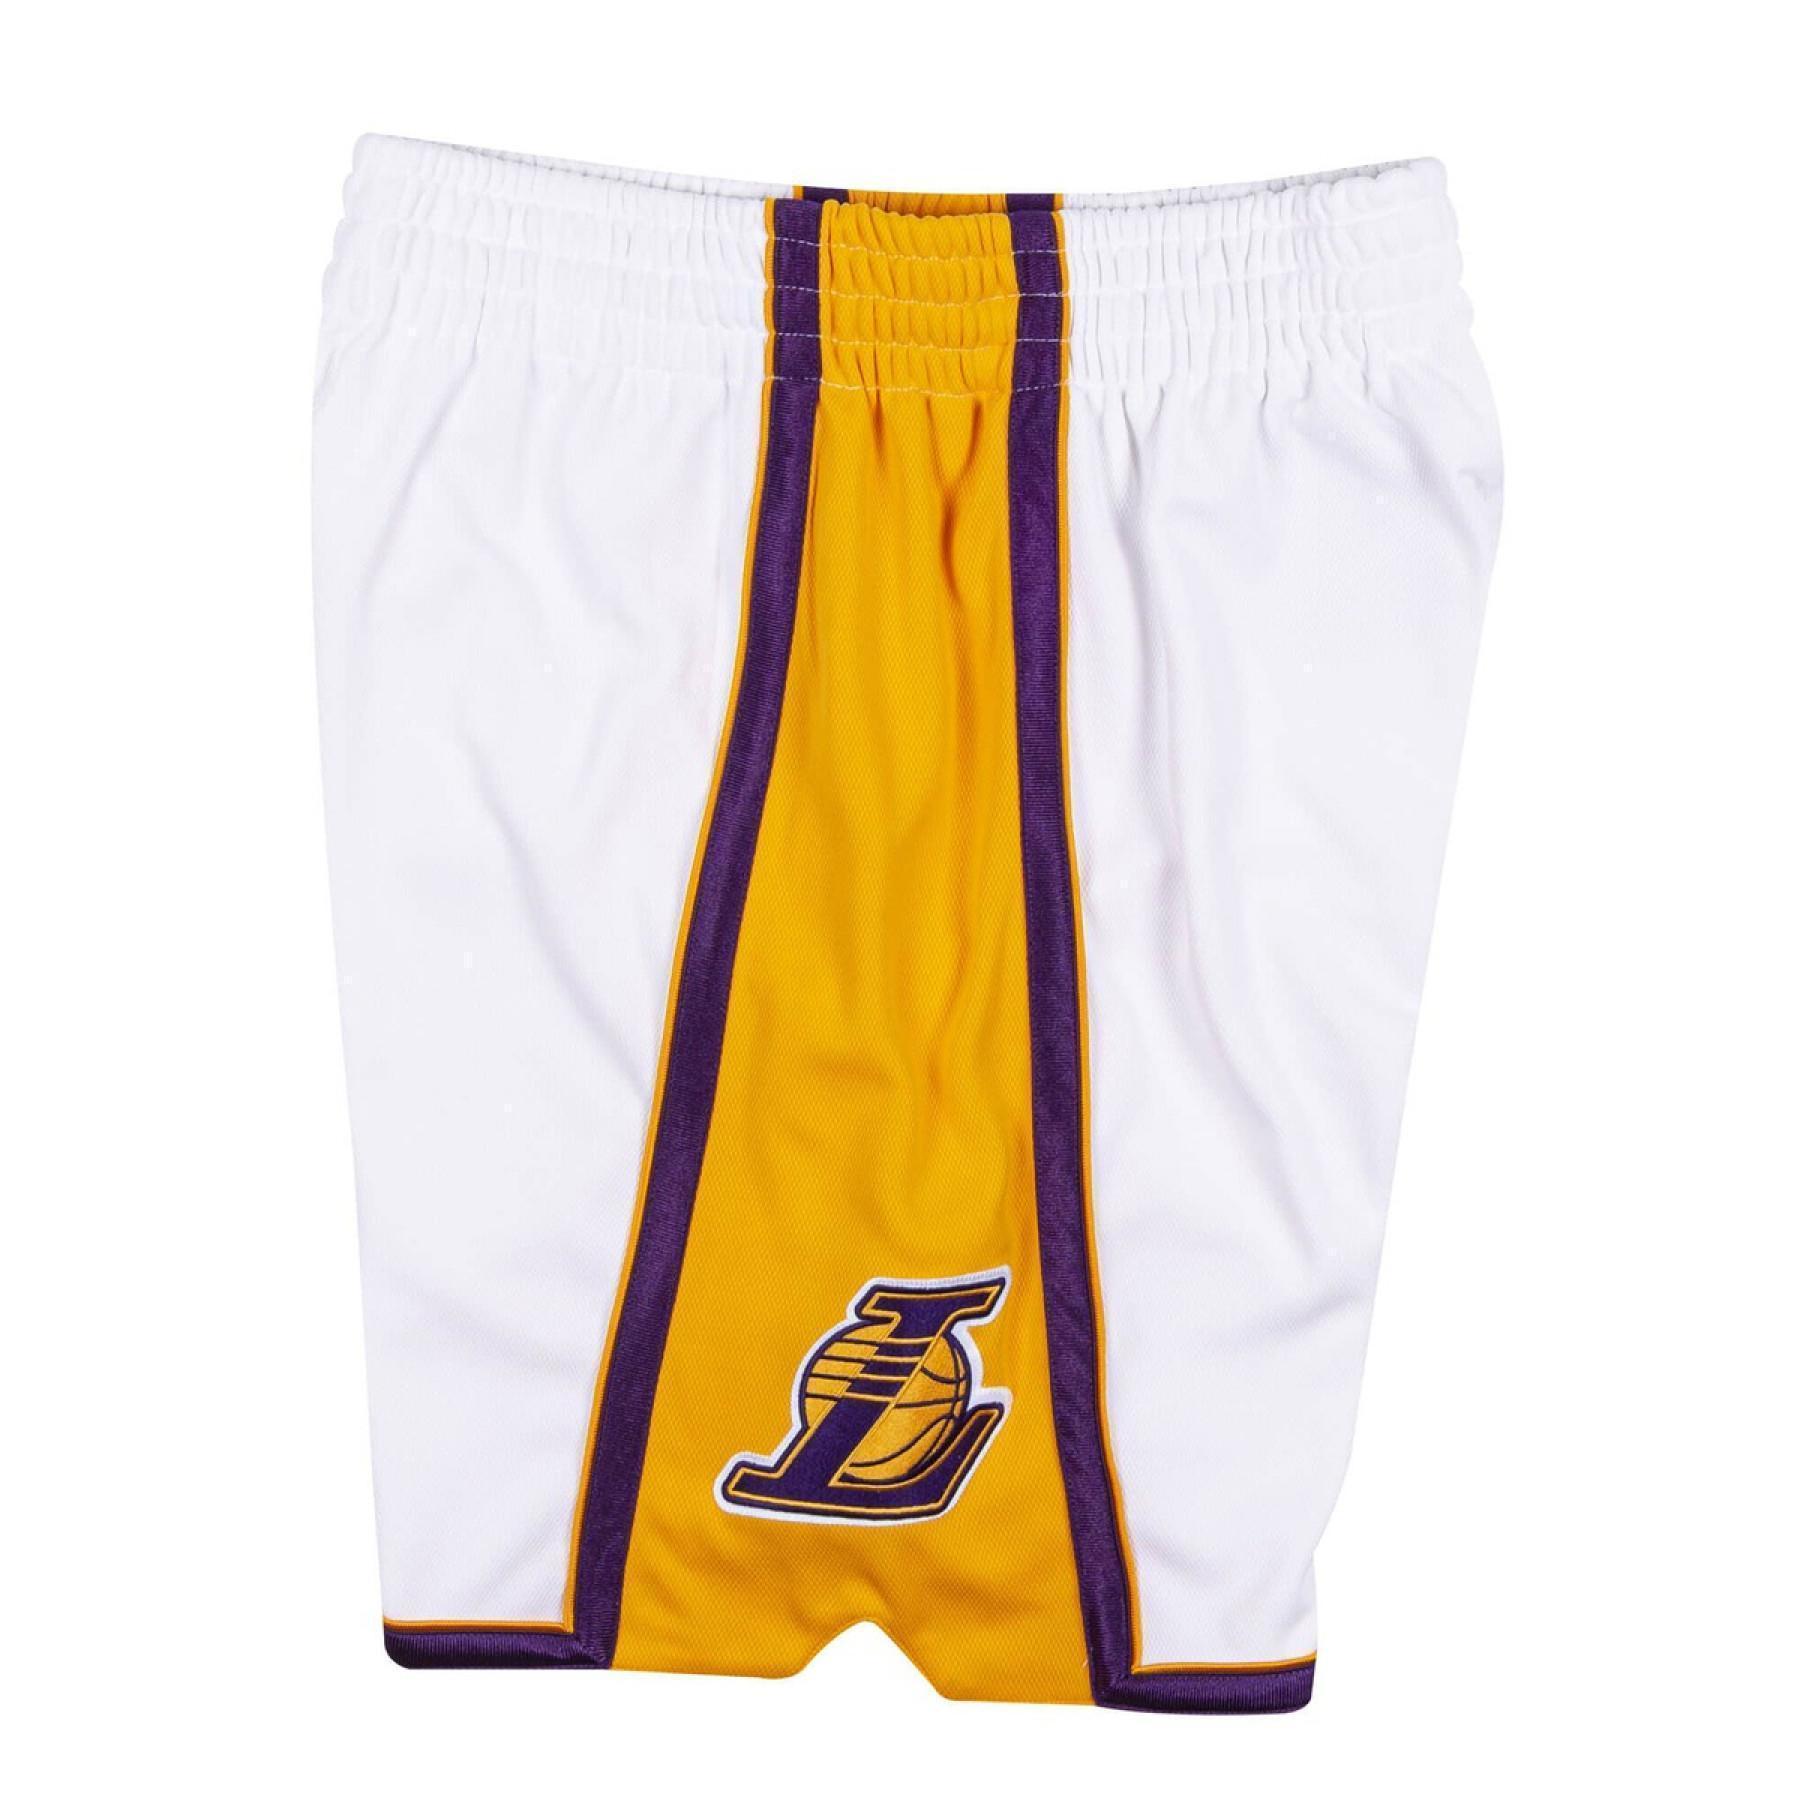 Authentieke shorts Los Angeles Lakers alternate 2009/10